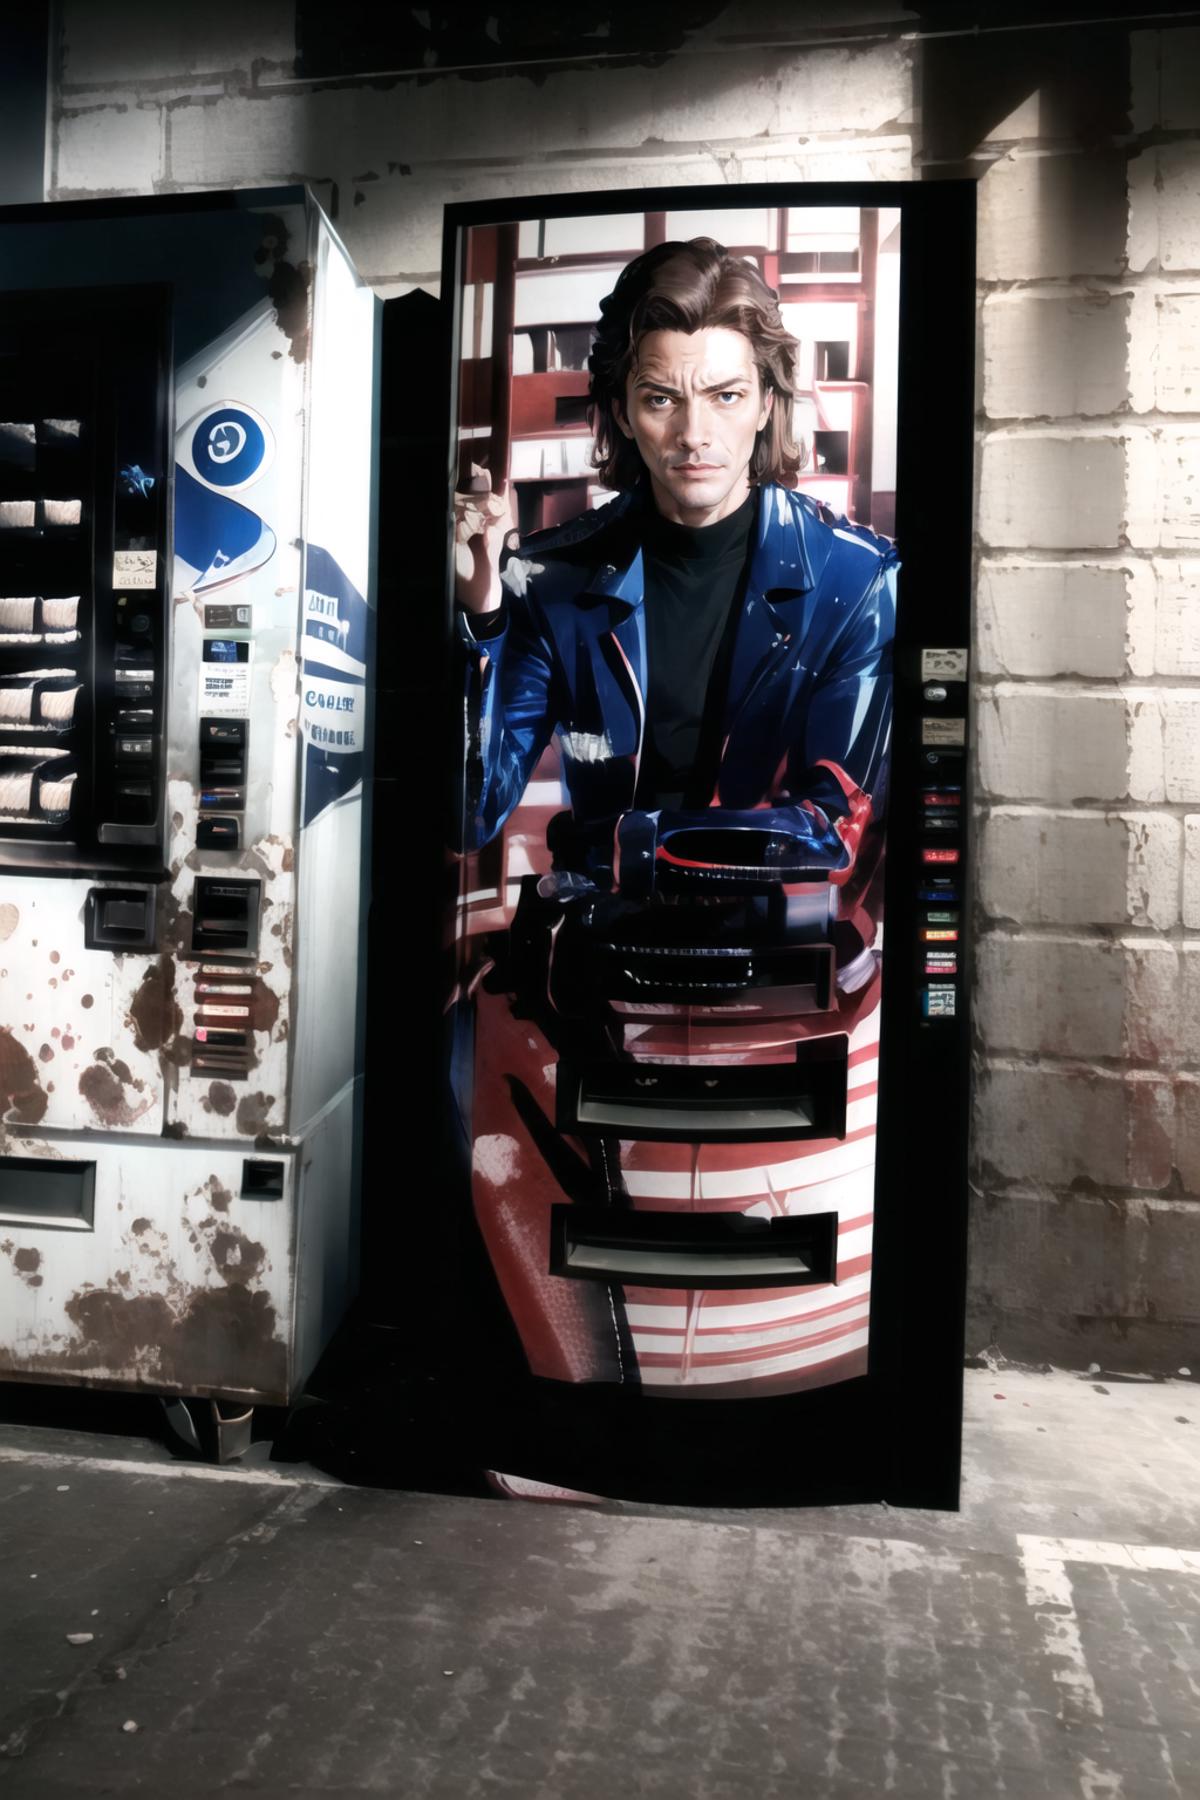 Vending Machine | Concept LoRA image by FallenIncursio